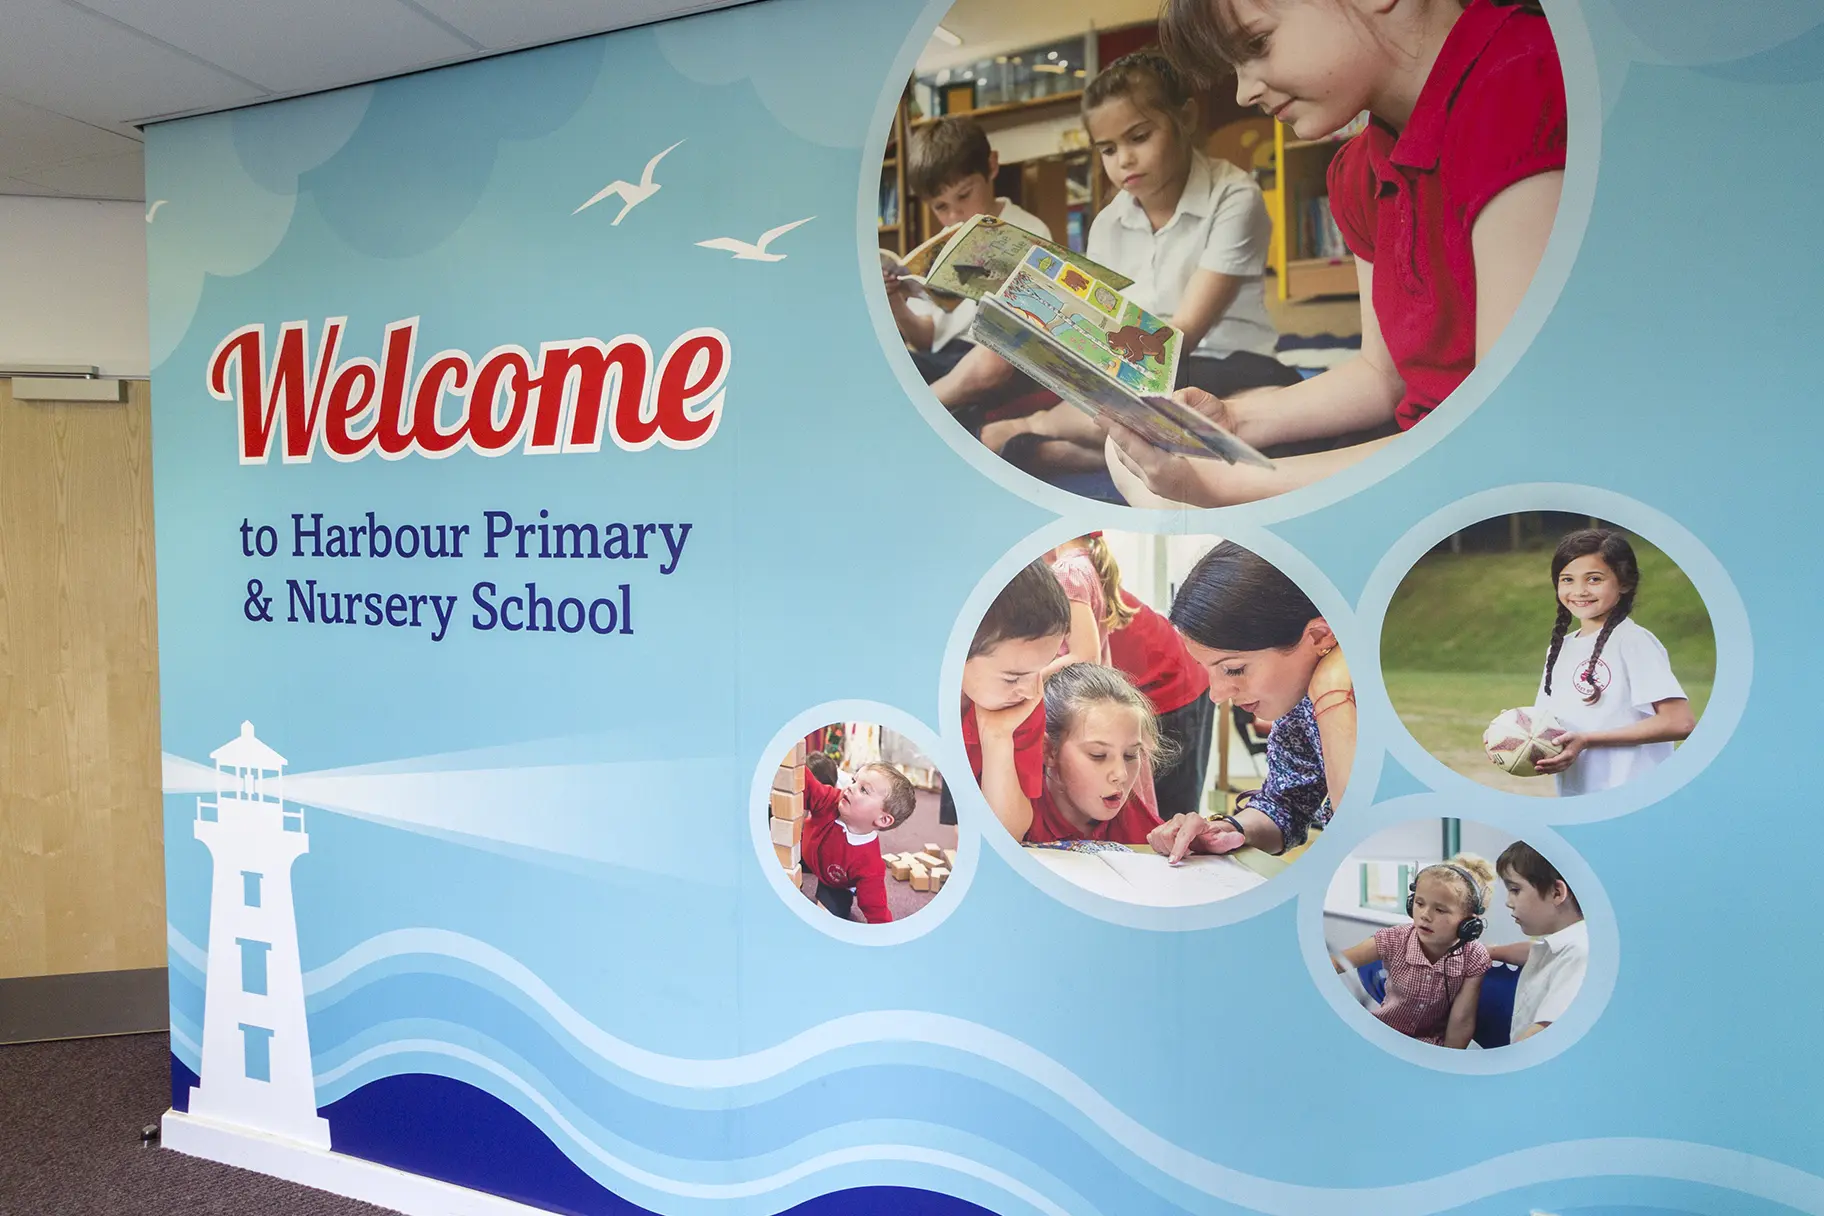 Harbour Primary & Nursery School values internal and external wall art